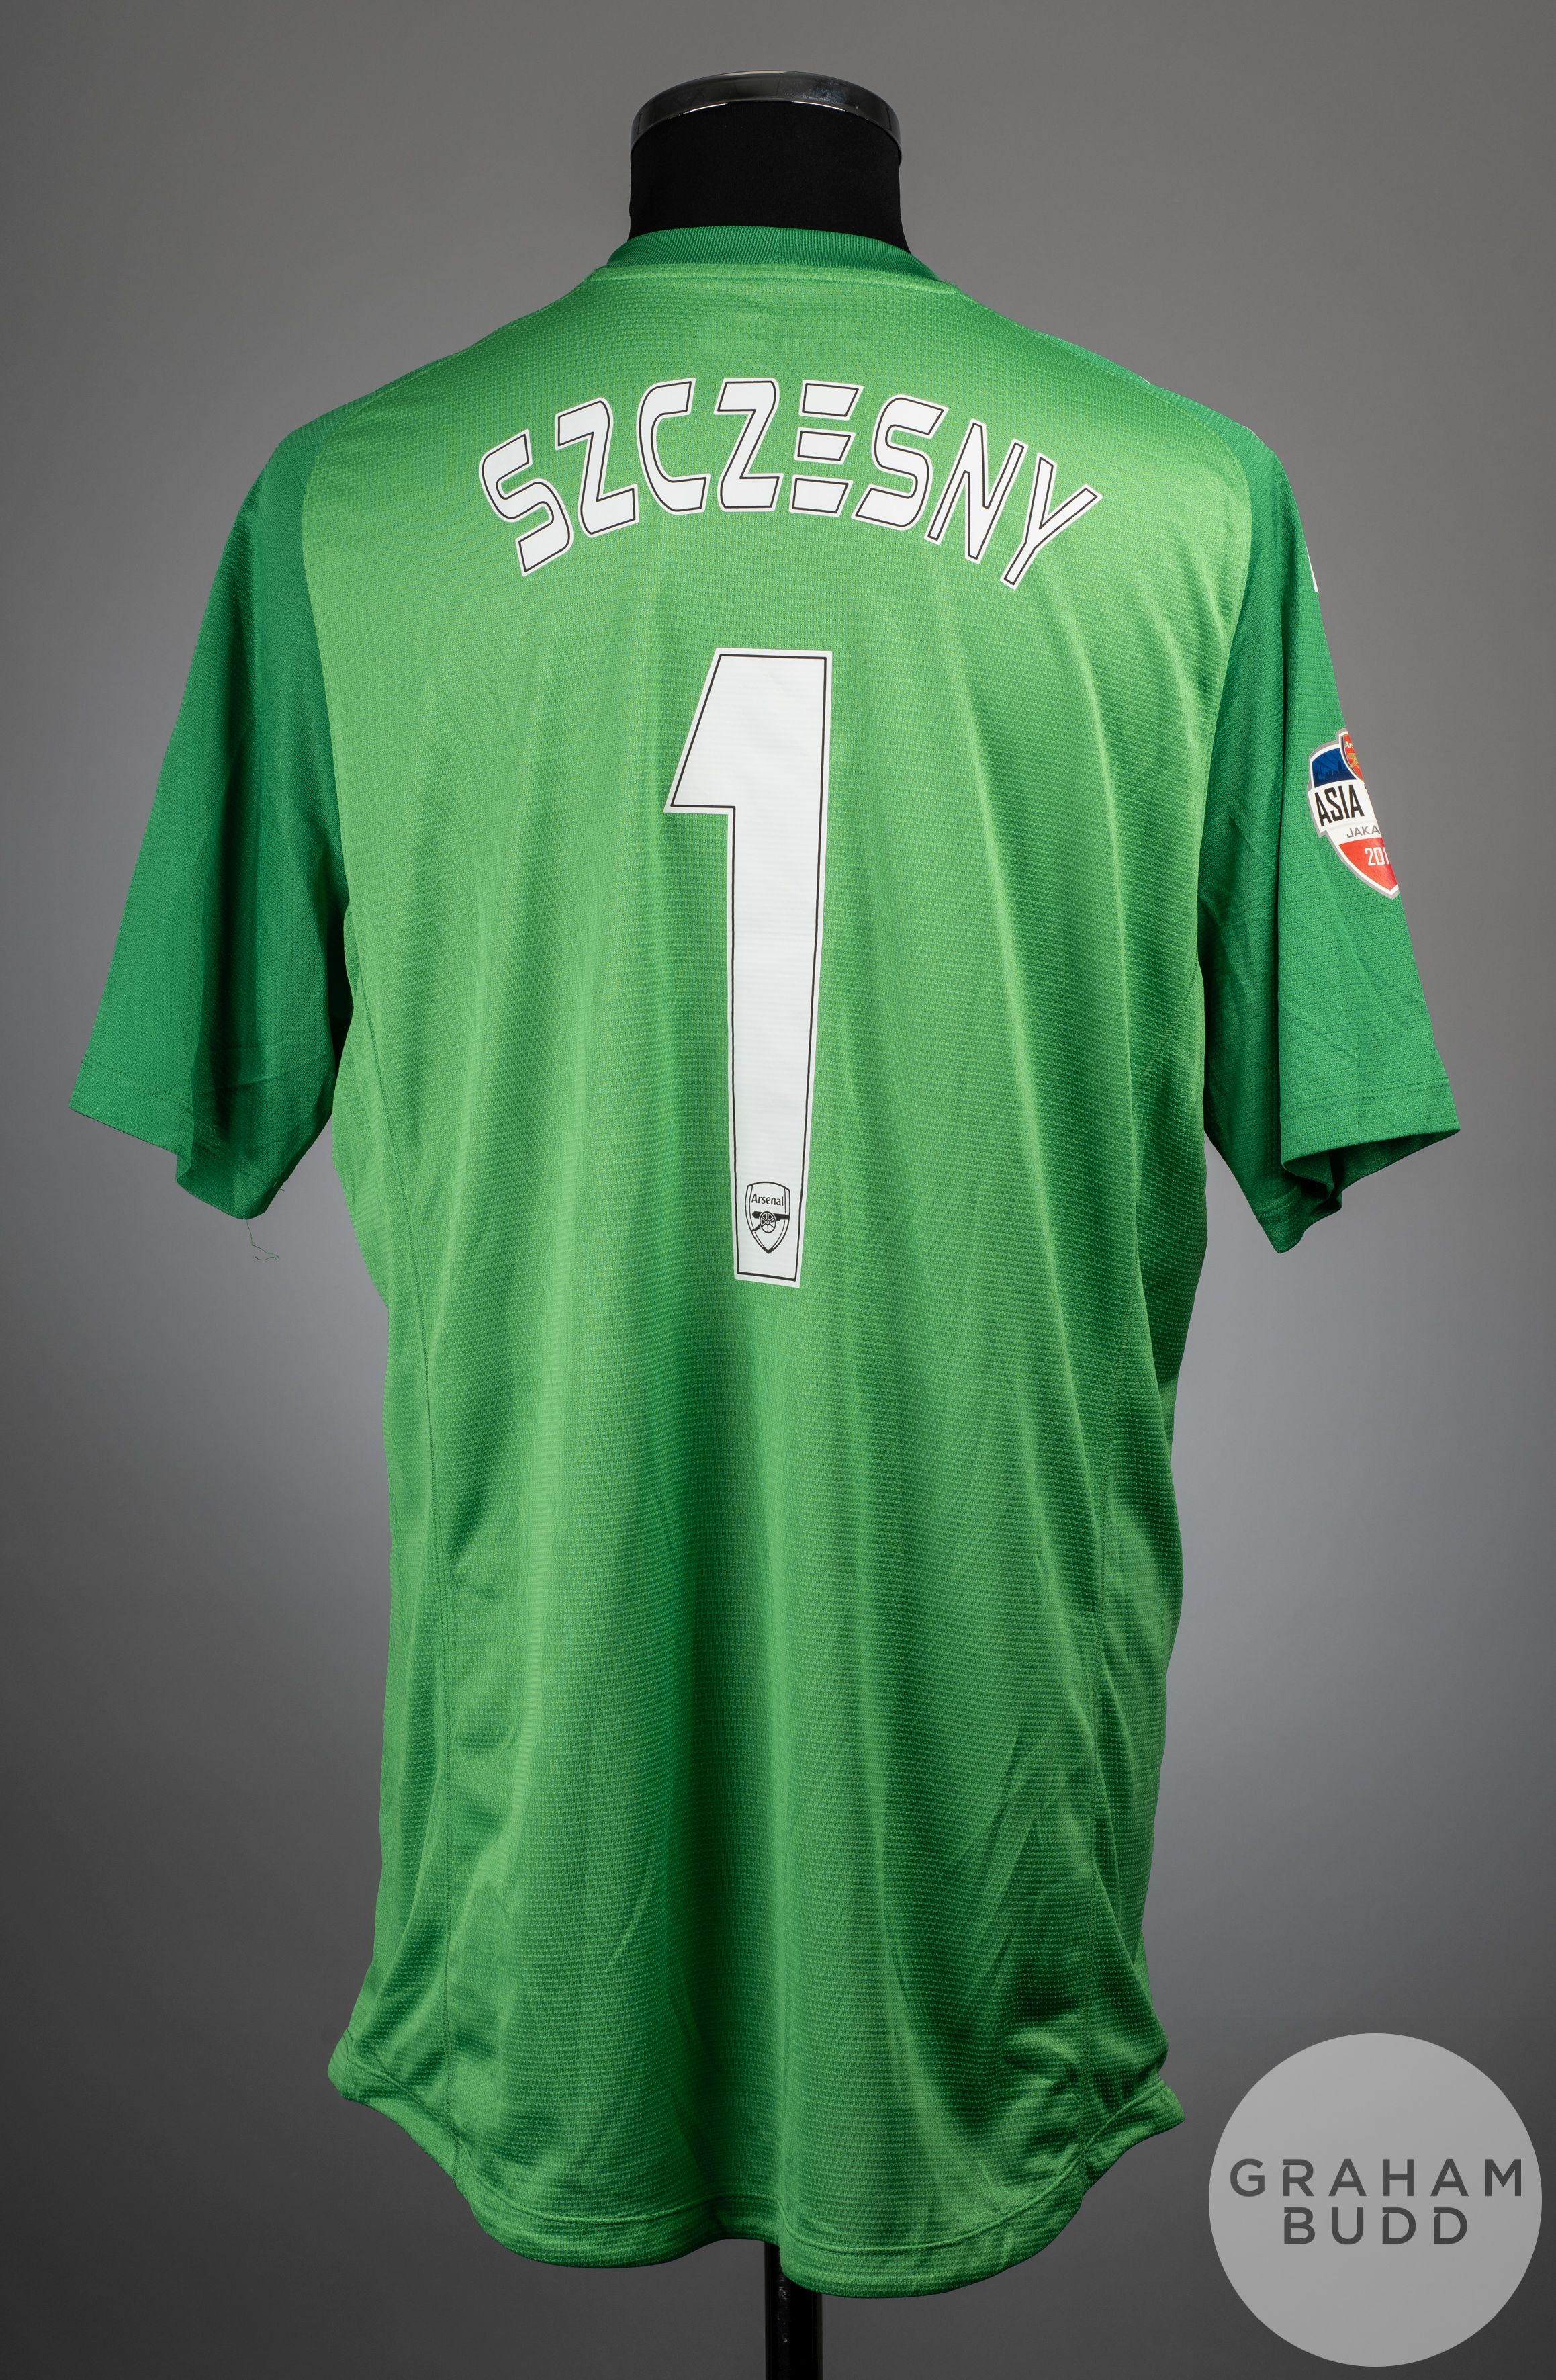 Wojciech Szczesny green No.1 Arsenal match issue goalkeeper shirt, 2013 - Image 2 of 2